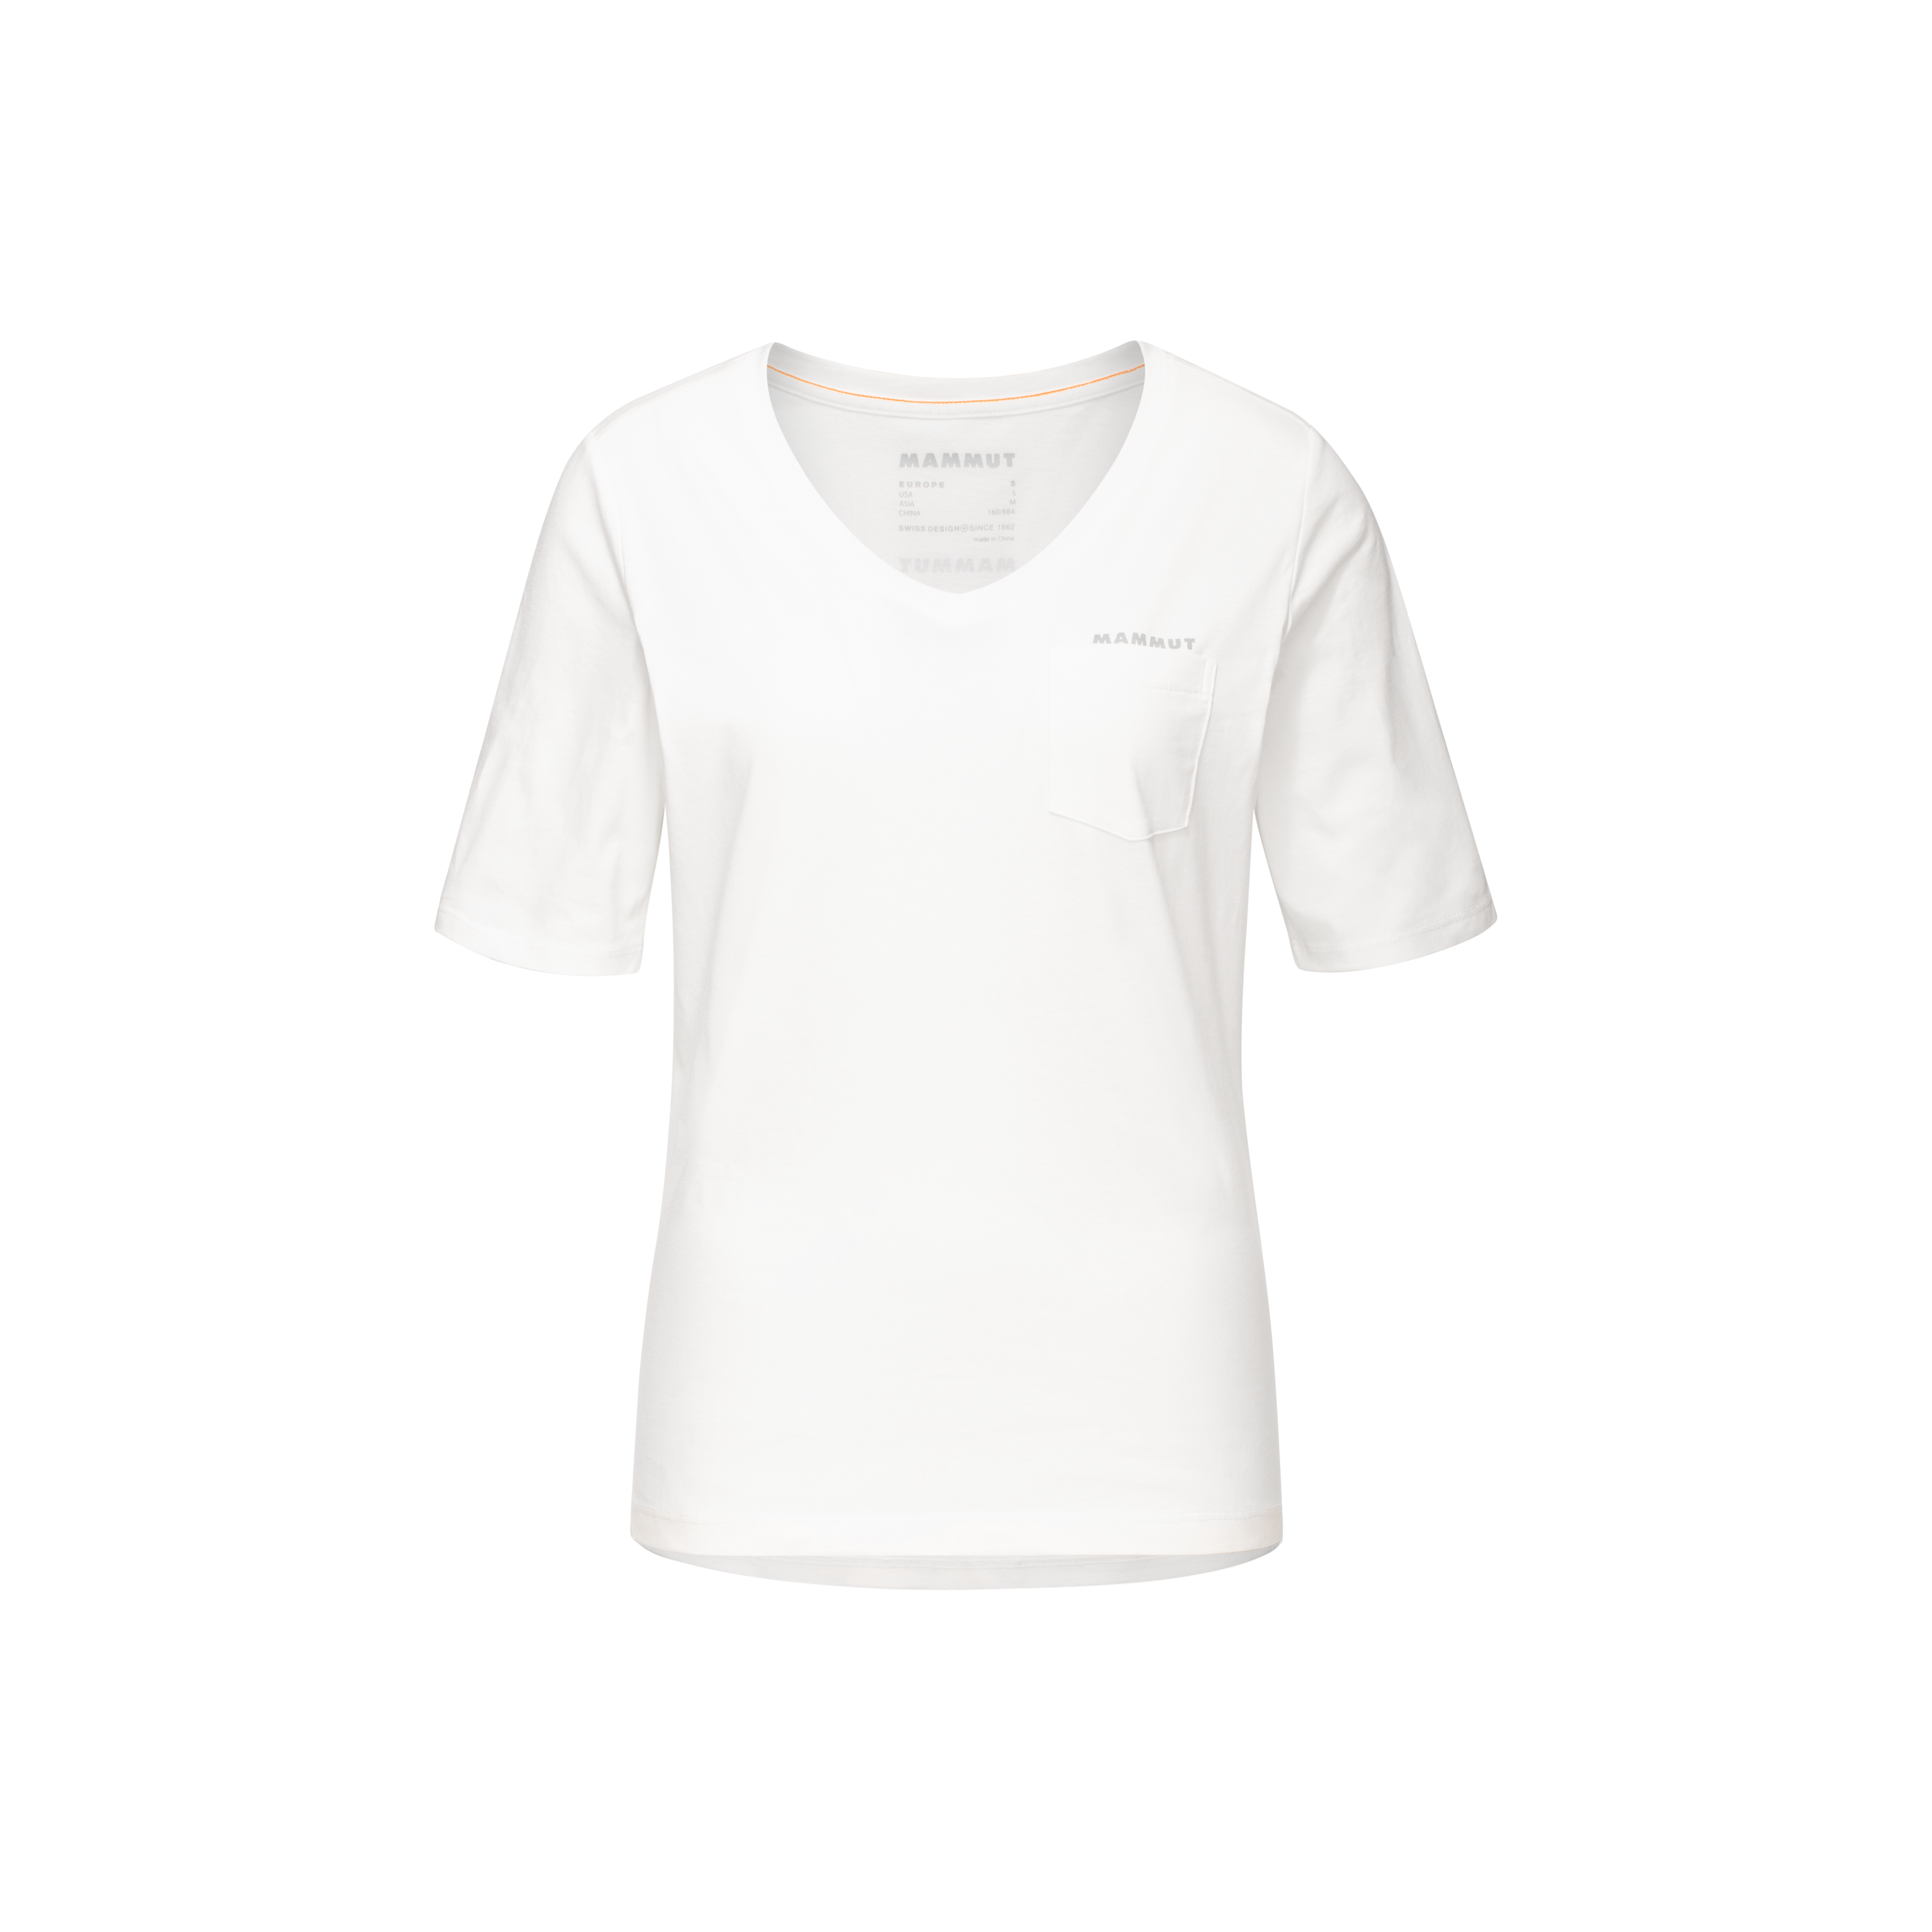 Mammut Pocket T-Shirt Women - white, XS thumbnail